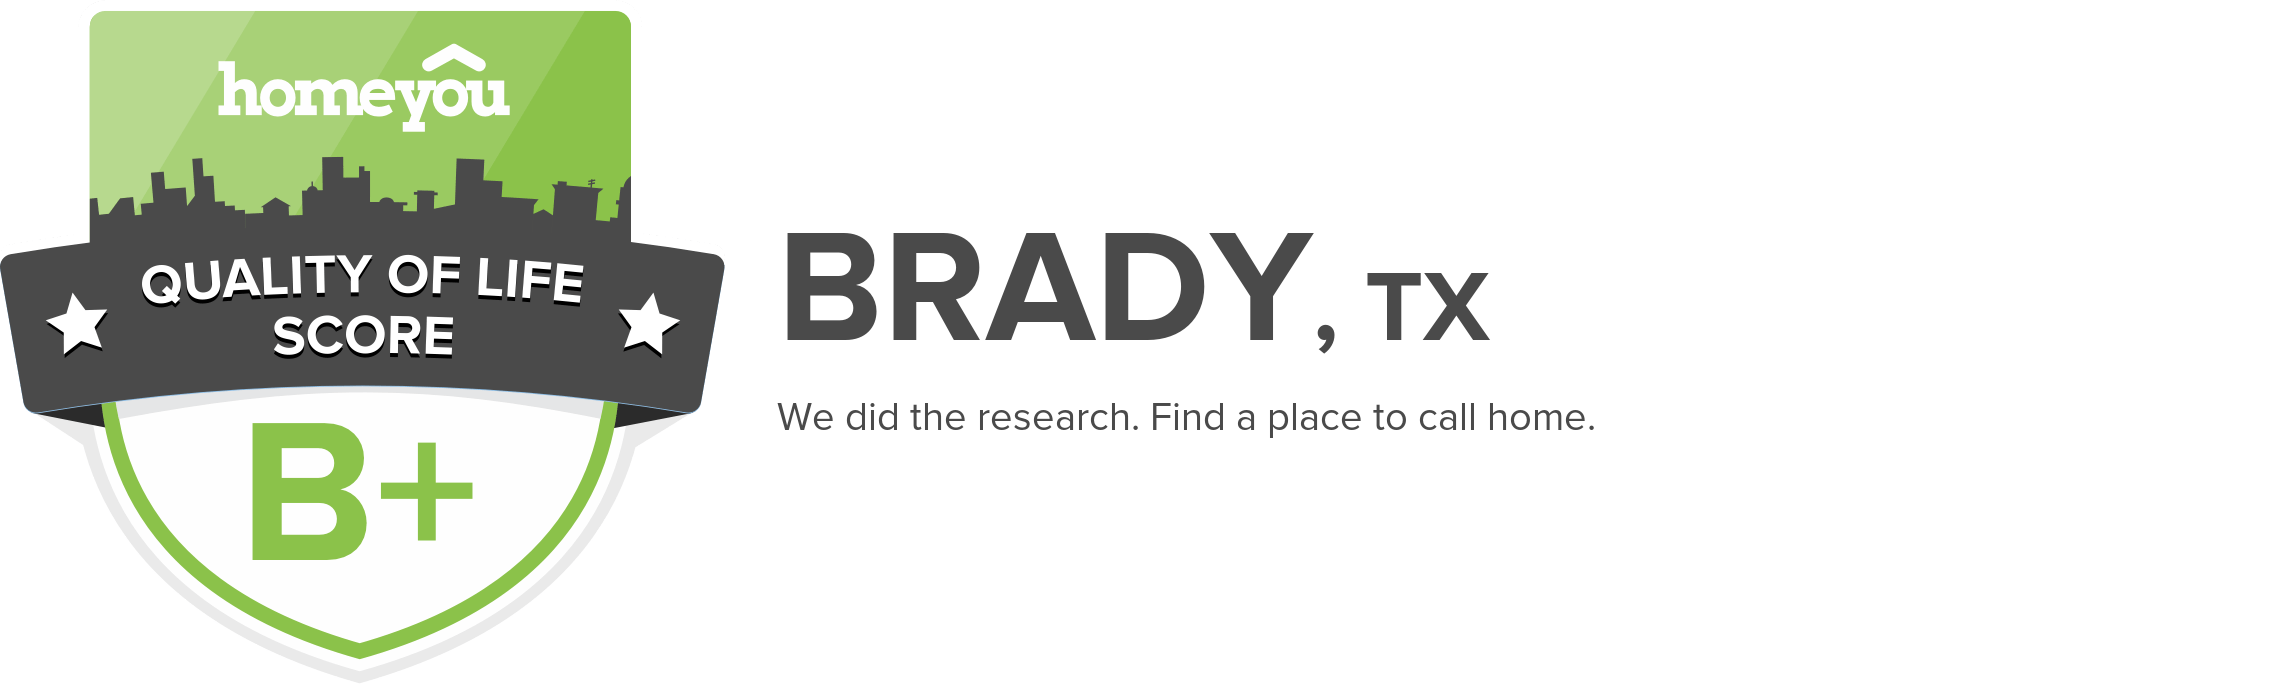 Brady, TX